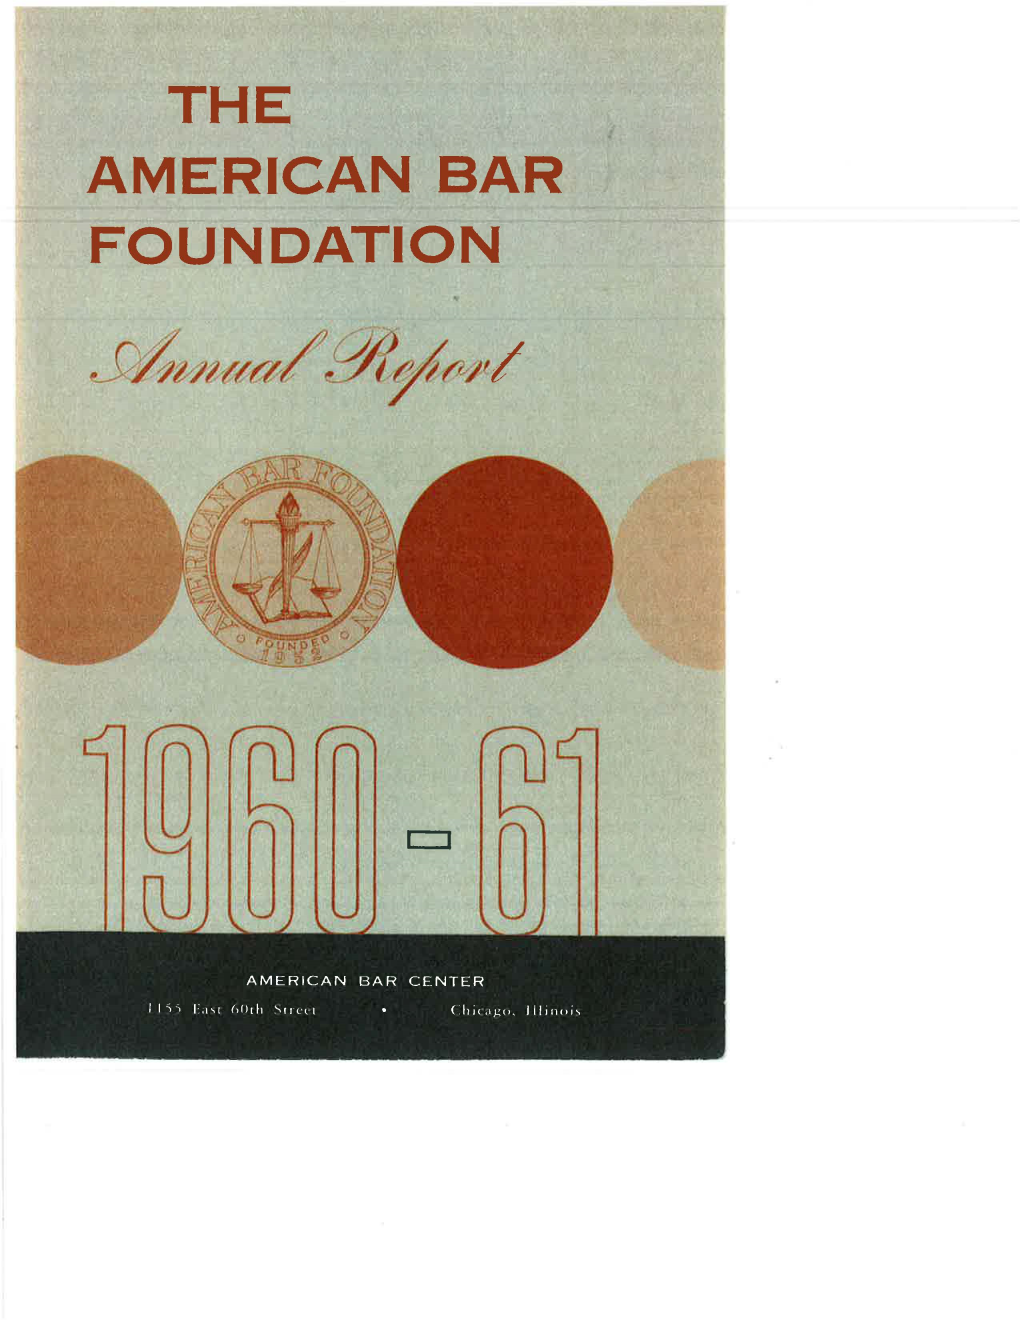 Annual Report 1961